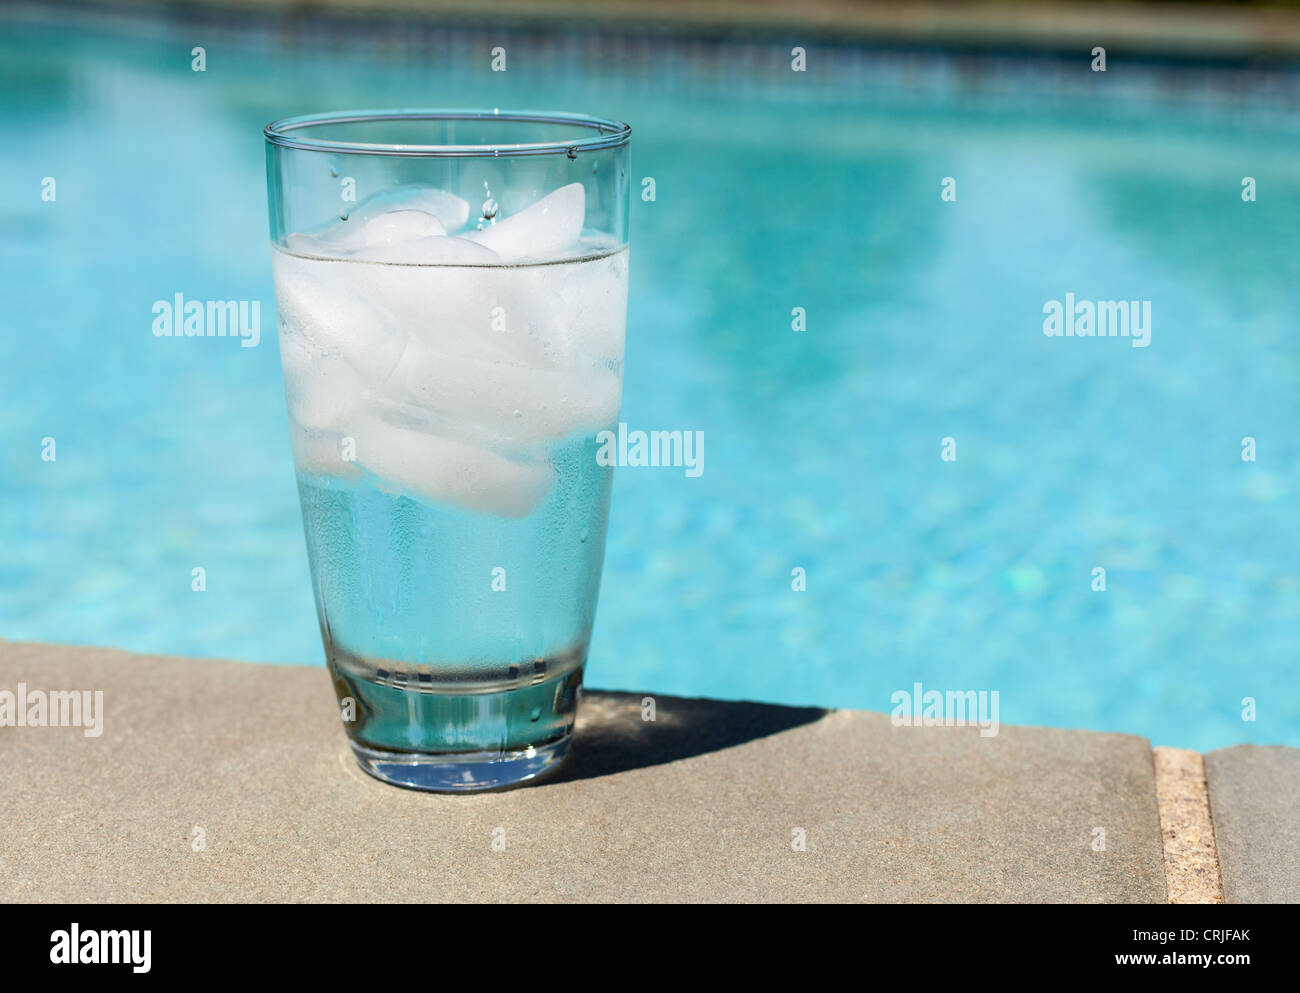 https://c8.alamy.com/comp/CRJFAK/plain-glass-of-water-with-ice-cubes-on-side-of-blue-swimming-pool-CRJFAK.jpg